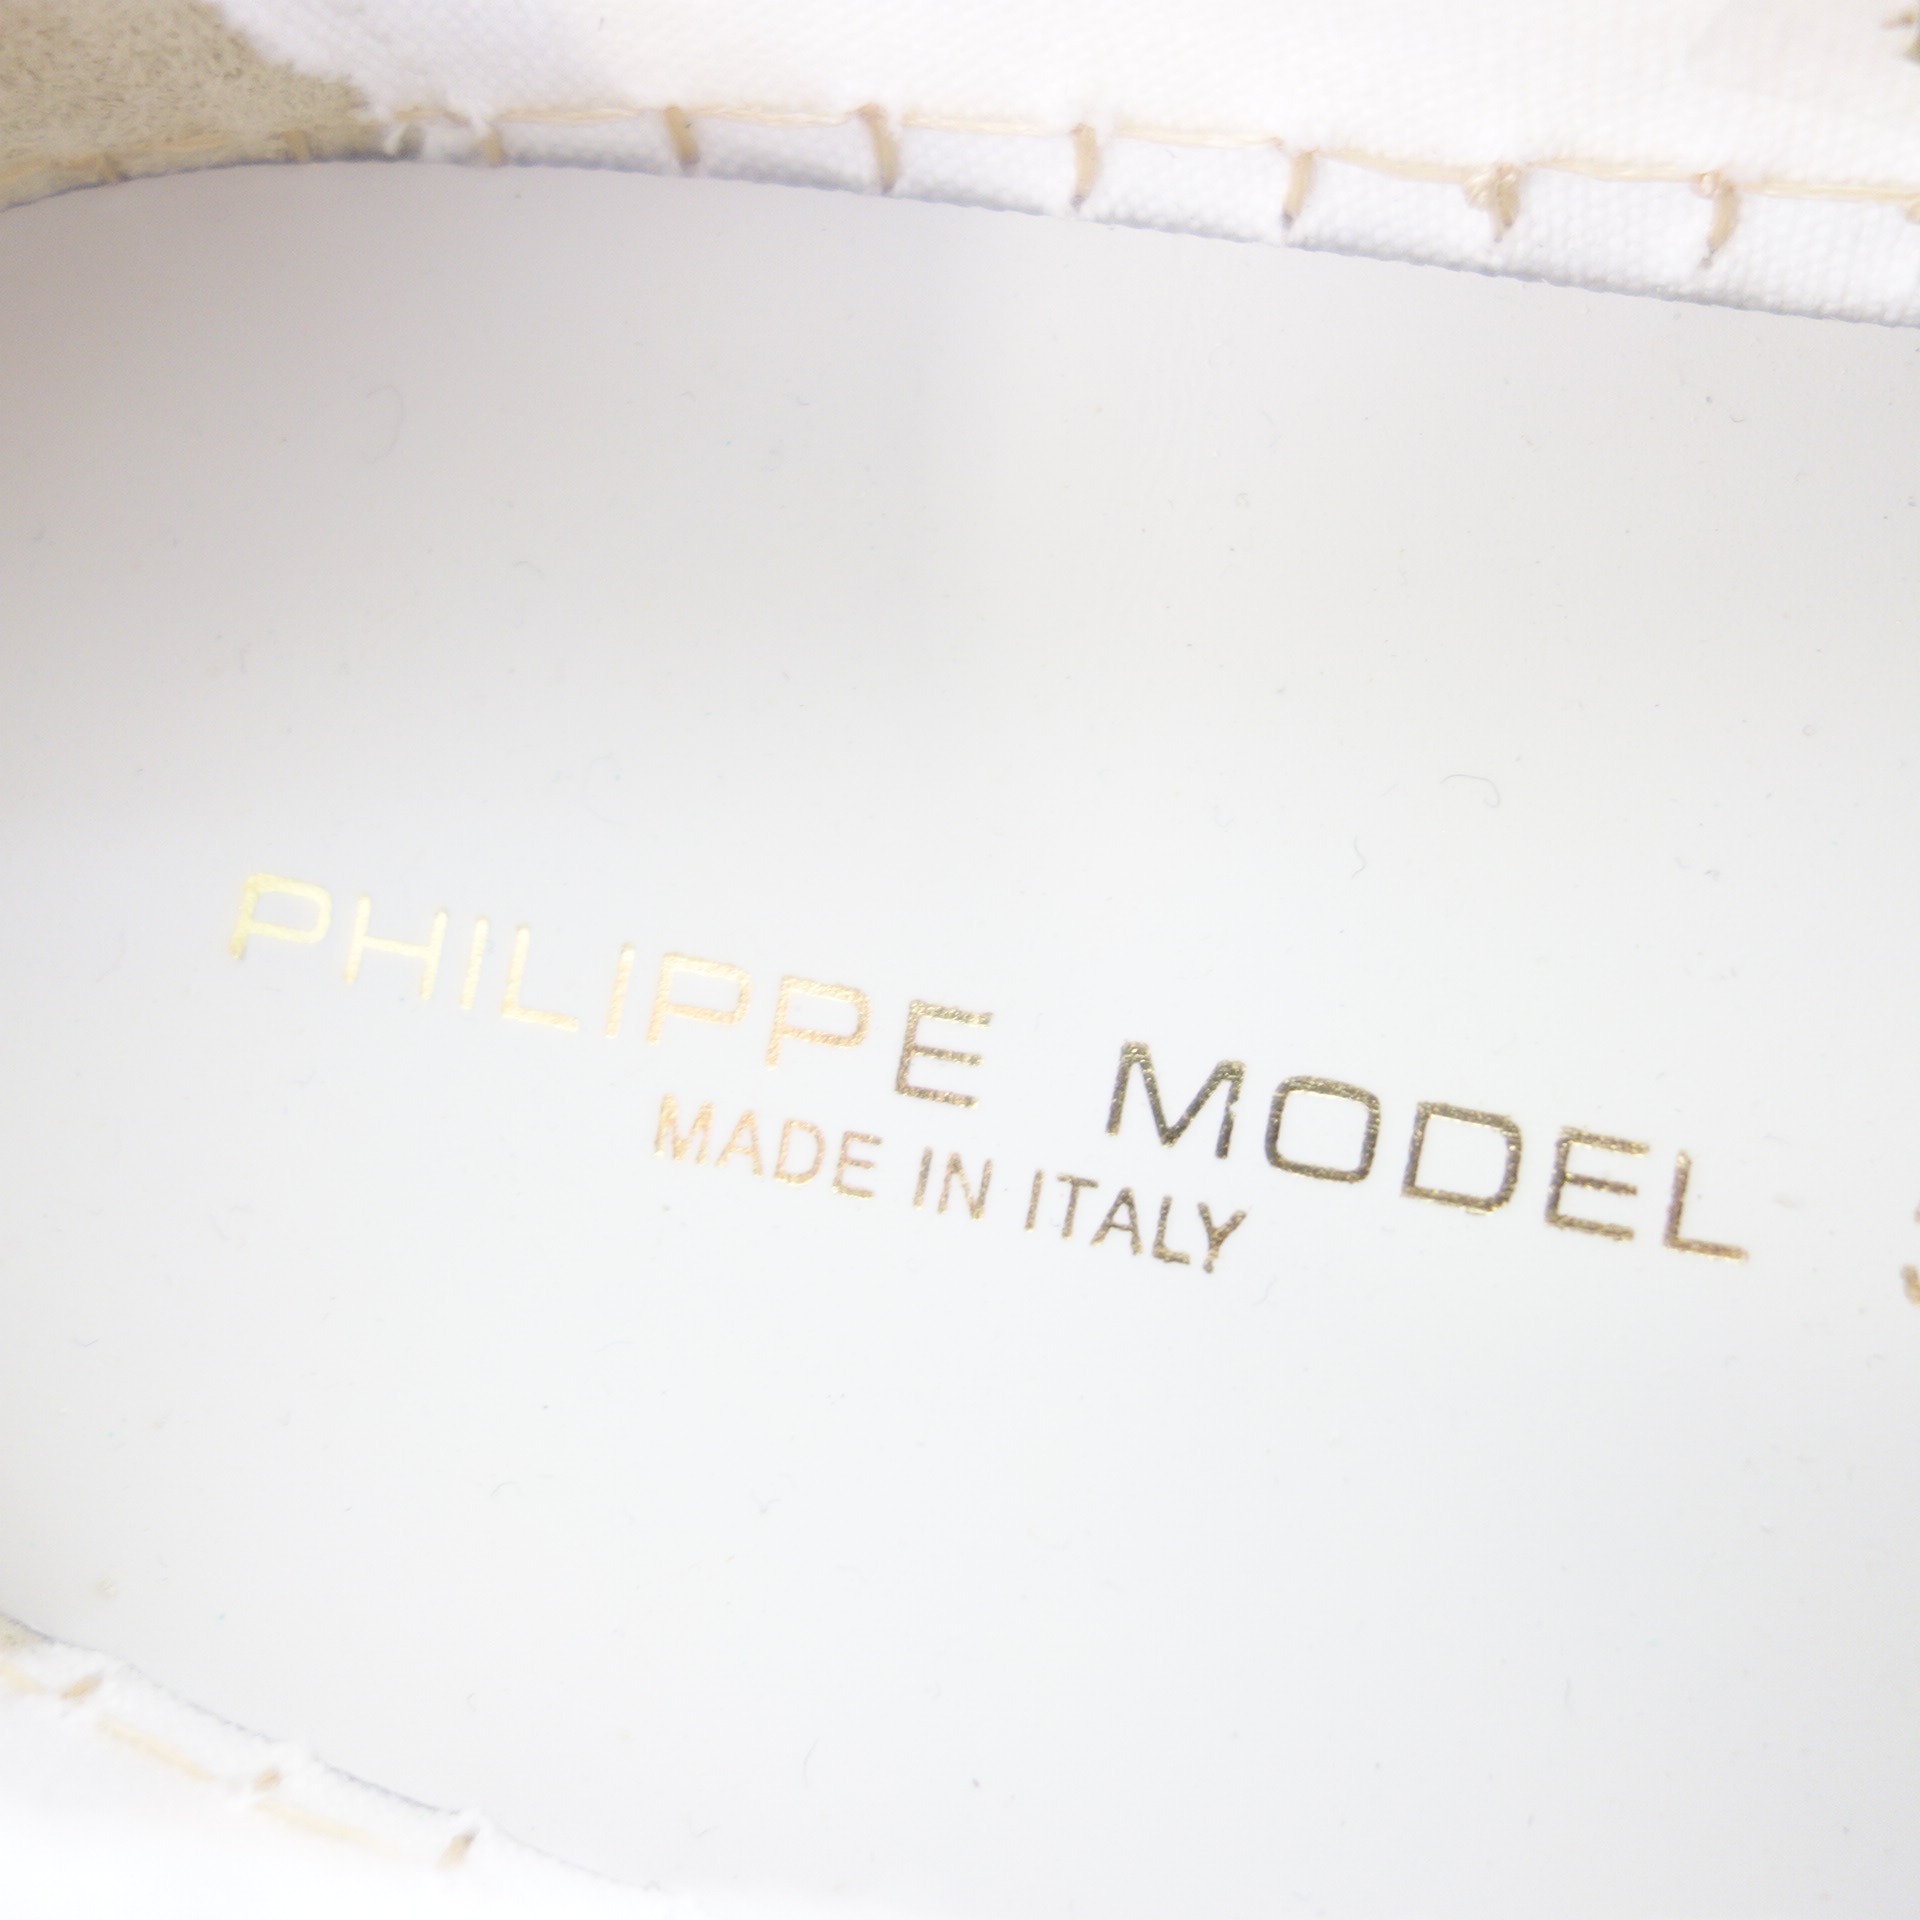 PHILIPPE MODEL Damen Schuhe Espadrilles Slipper Slip On Sneaker Marseille Weiß